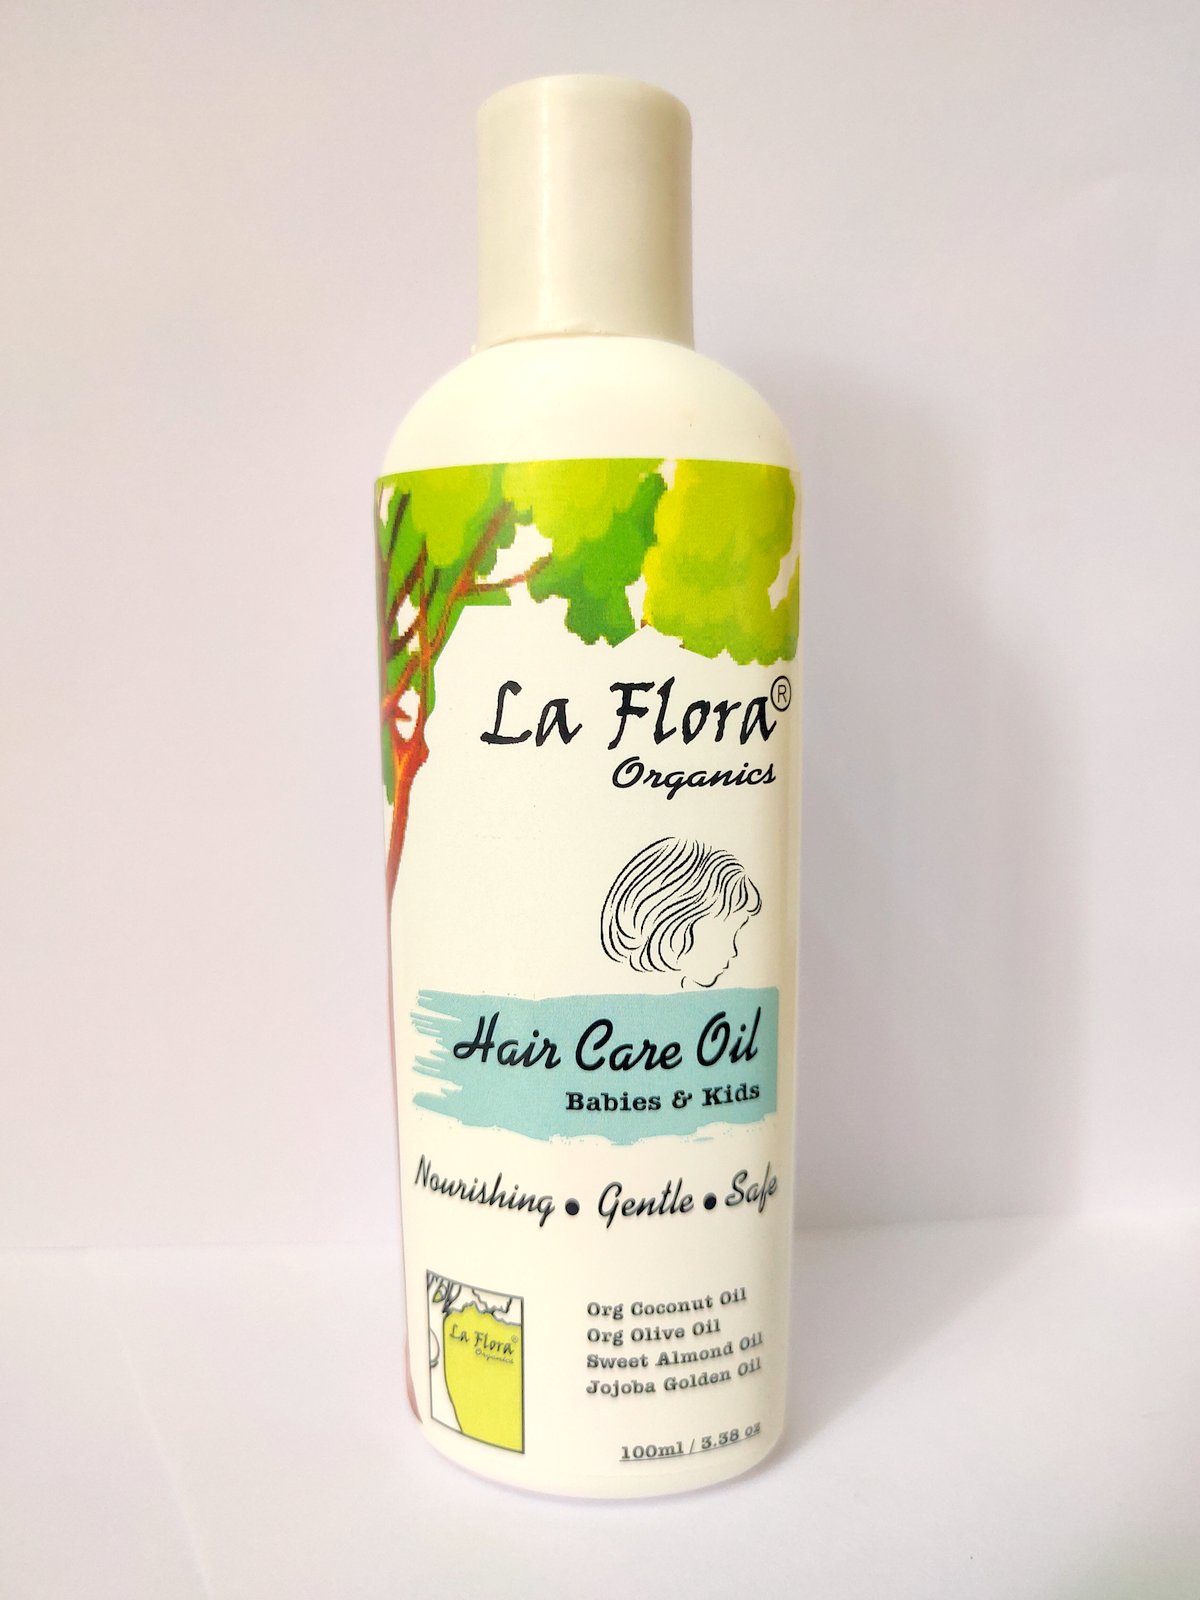 Hair care oil-Babies & Kids-Nourishing & Safe-100 ml – La Flora Organics